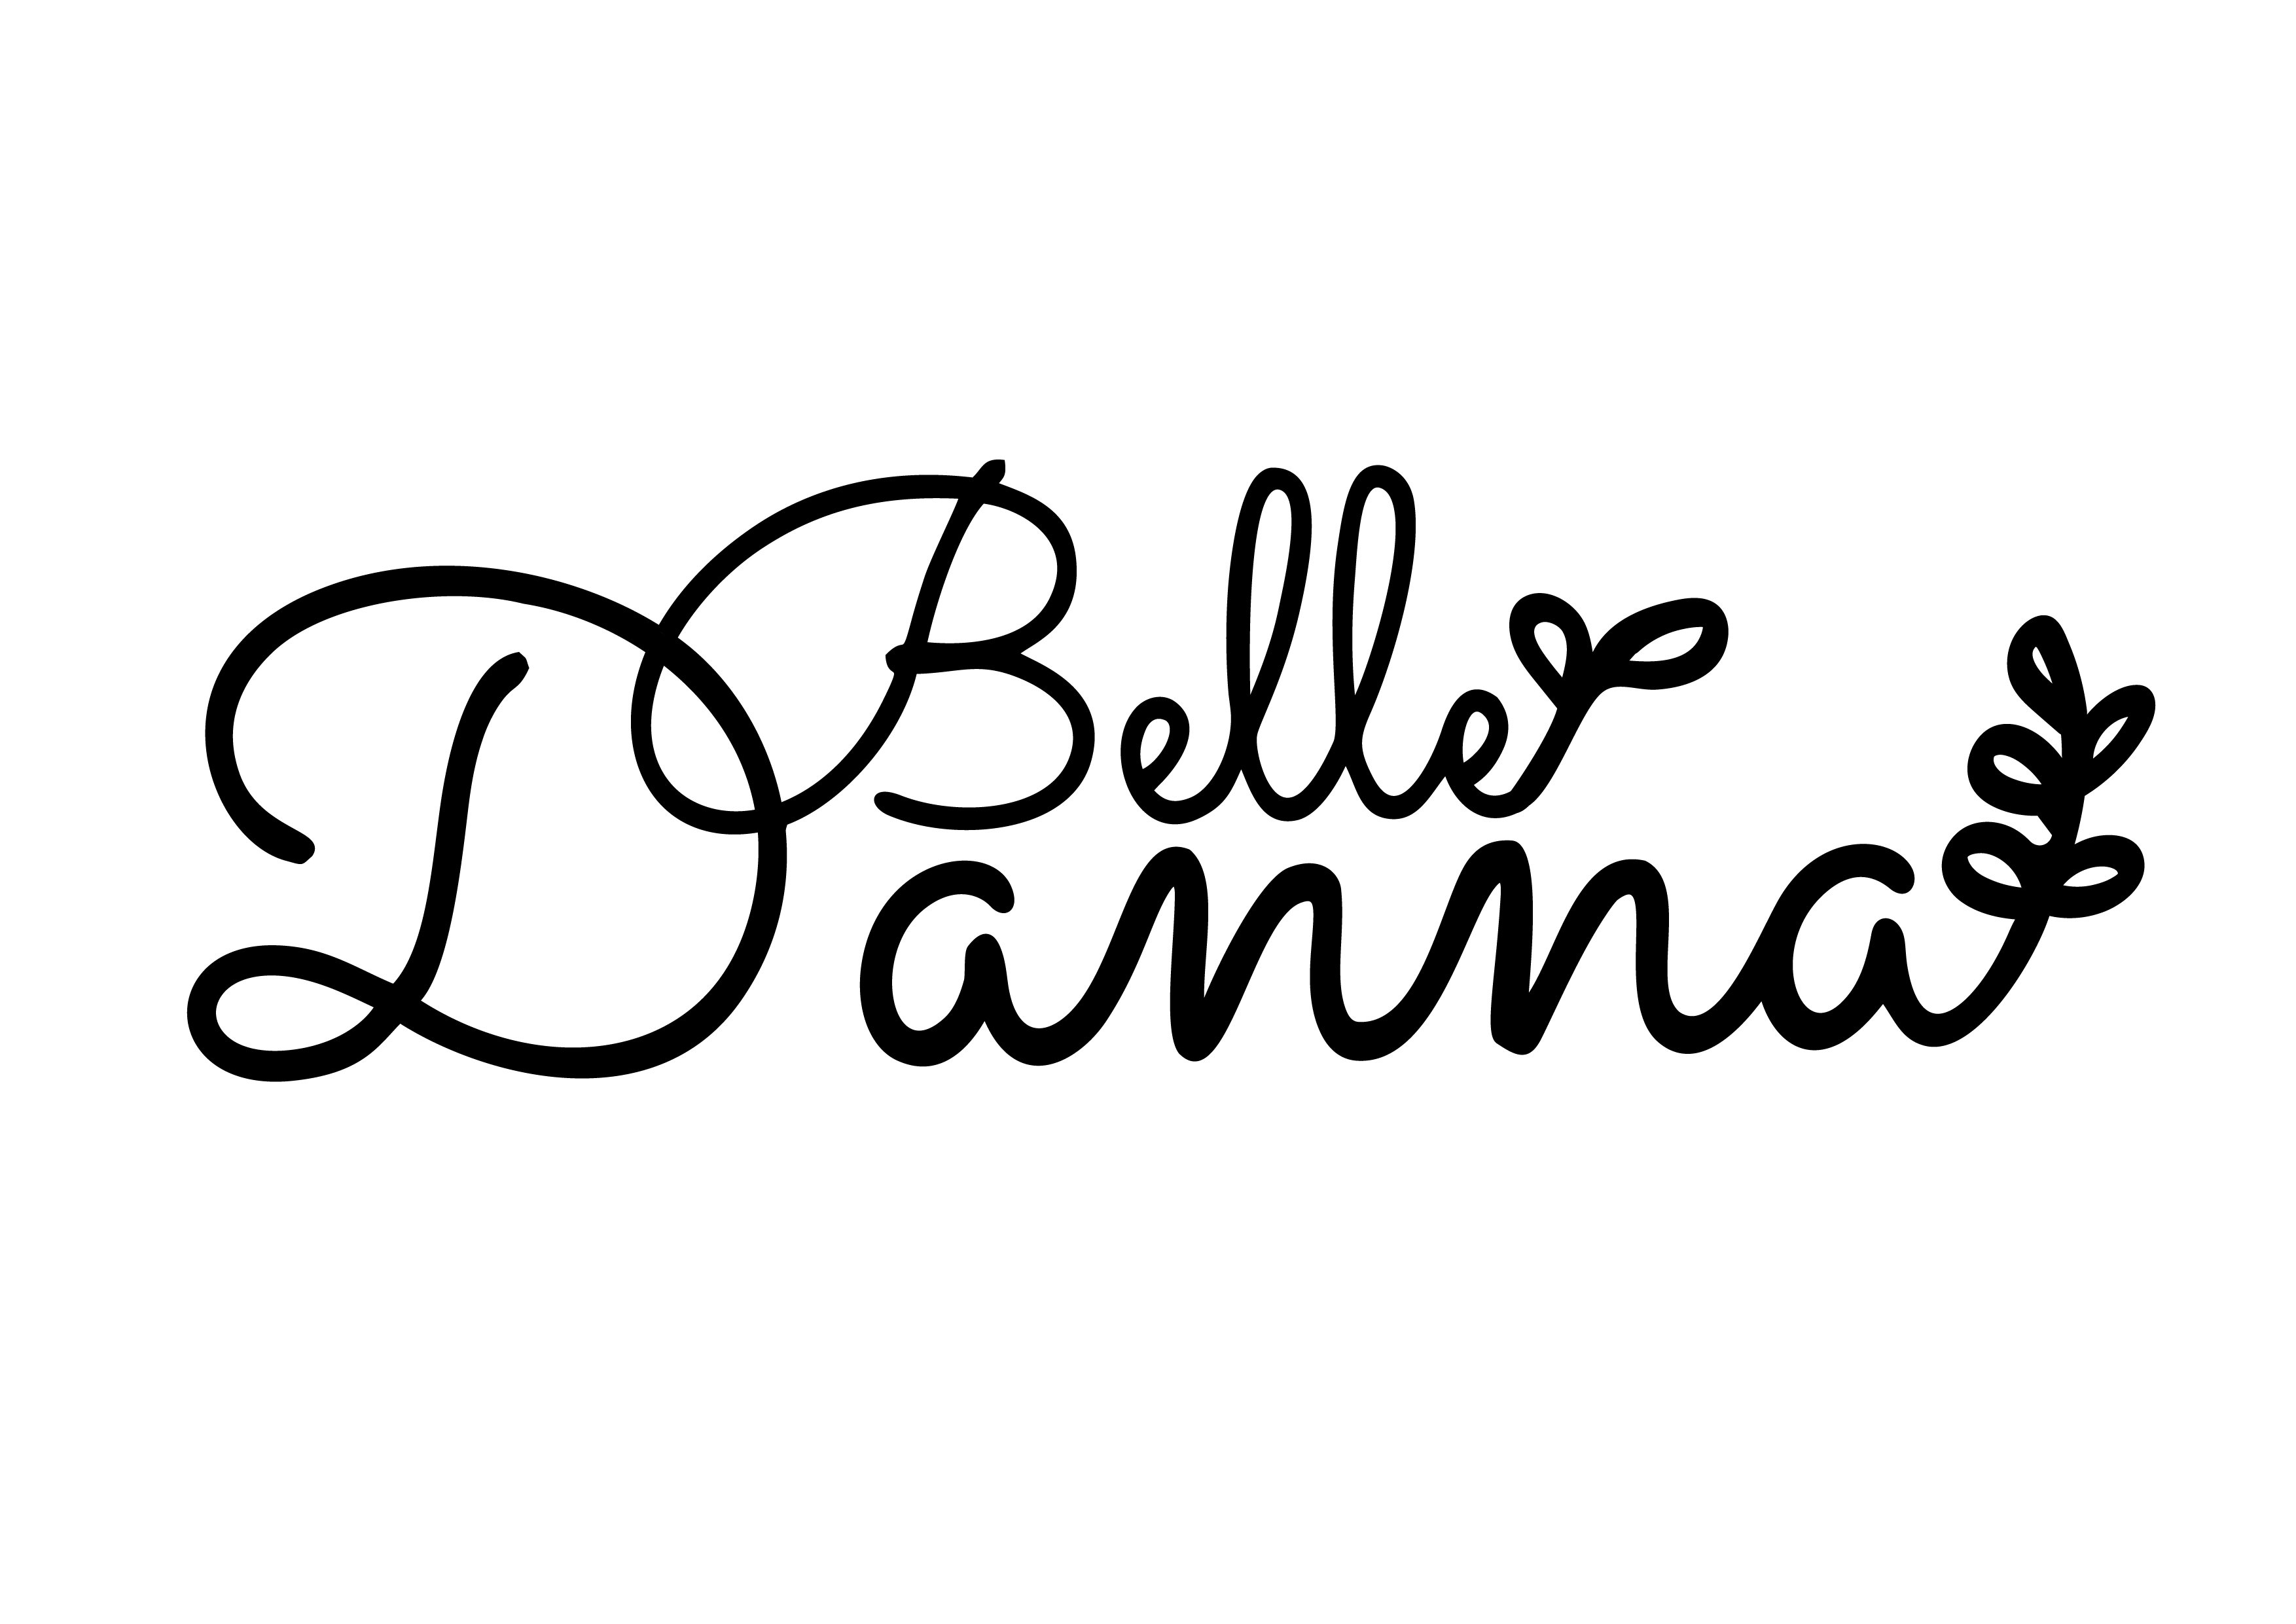 Trademark Logo DANNA BELLE